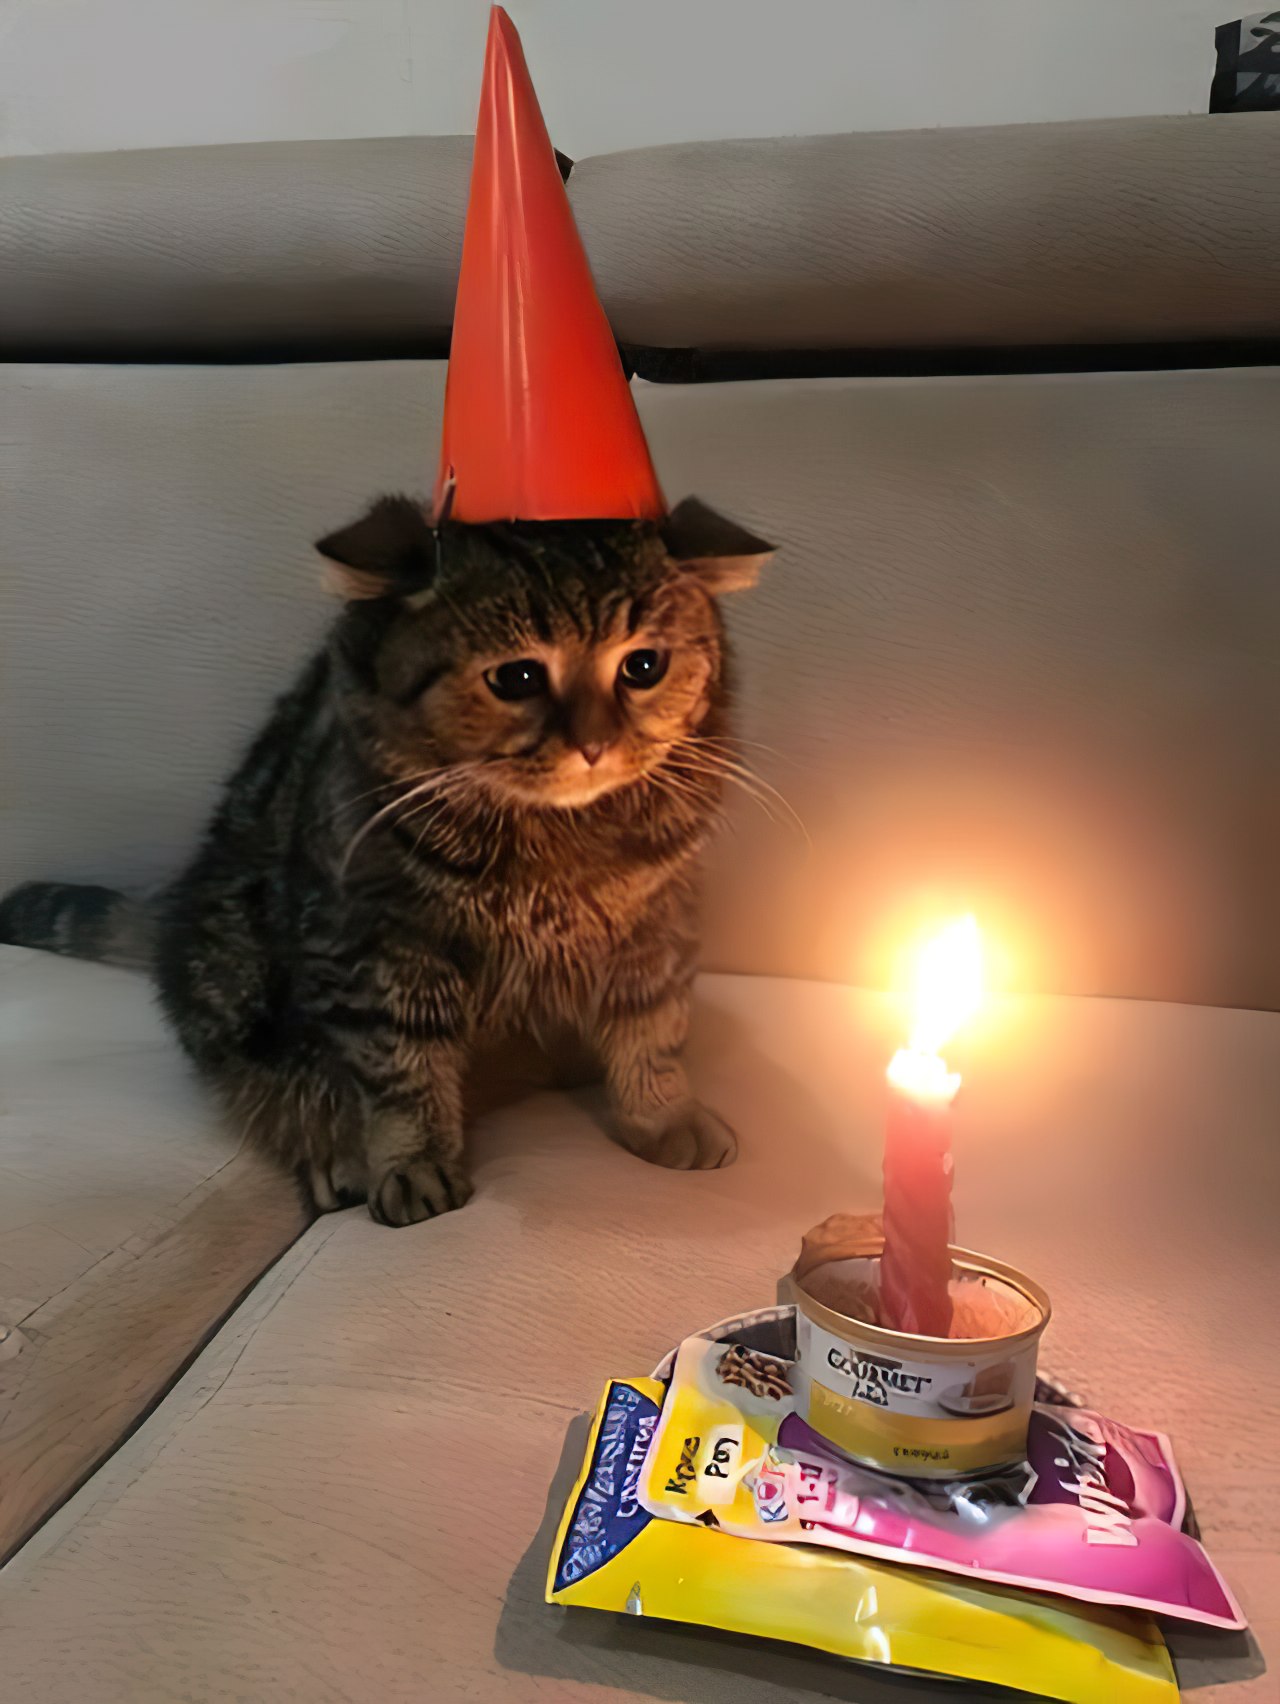 Sad Birthday Cat - Hat Candle Cake - Chat Cat Triste Anniversaire Bougie Paté.jpg